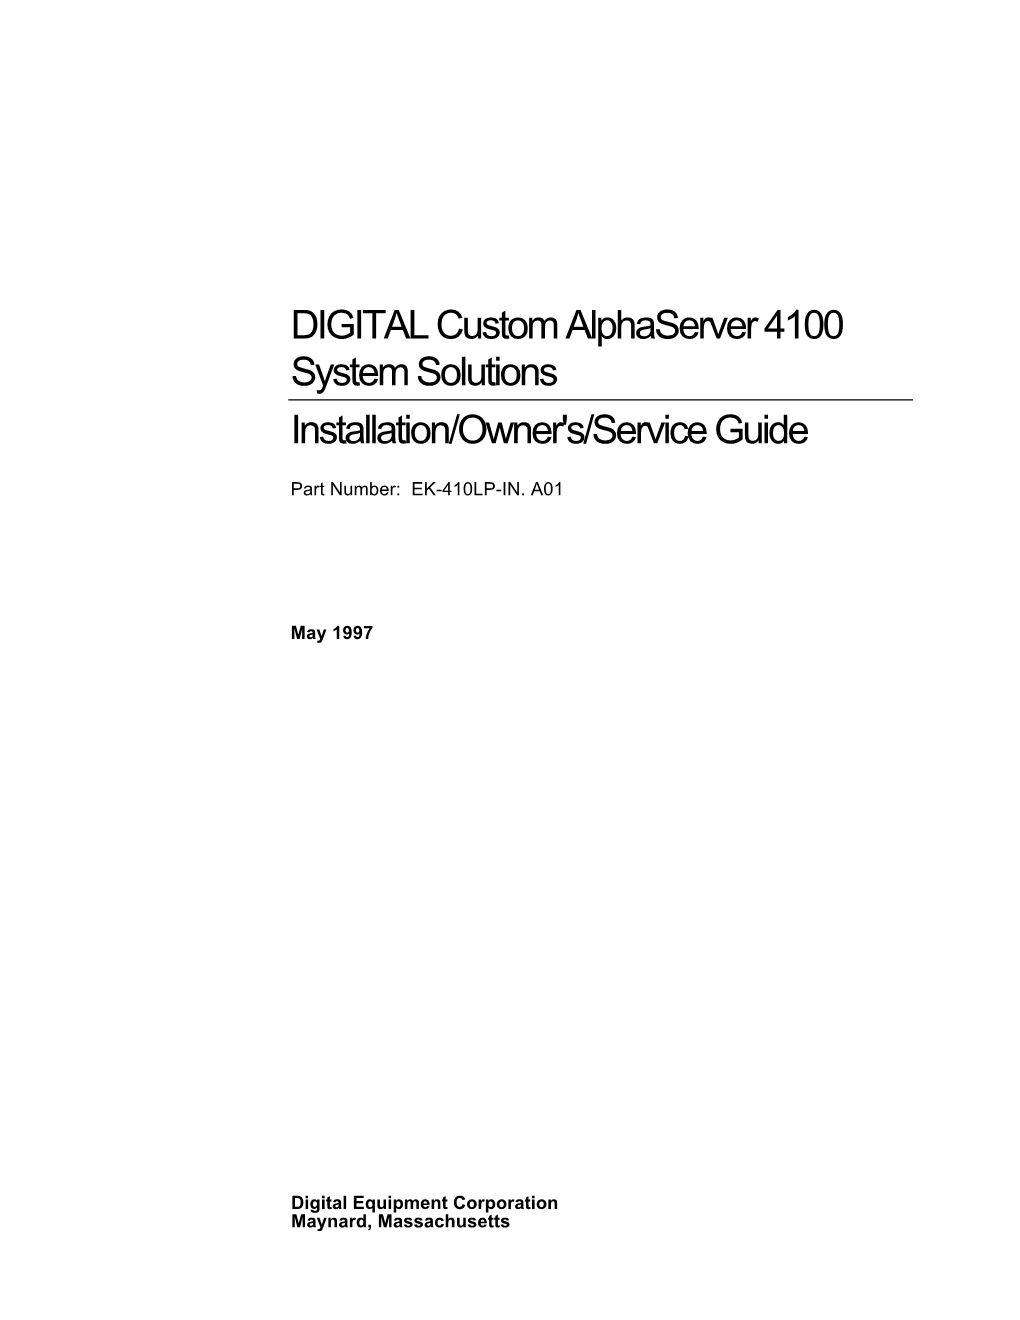 DIGITAL Custom Alphaserver 4100 System Solutions Installation/Owner's/Service Guide